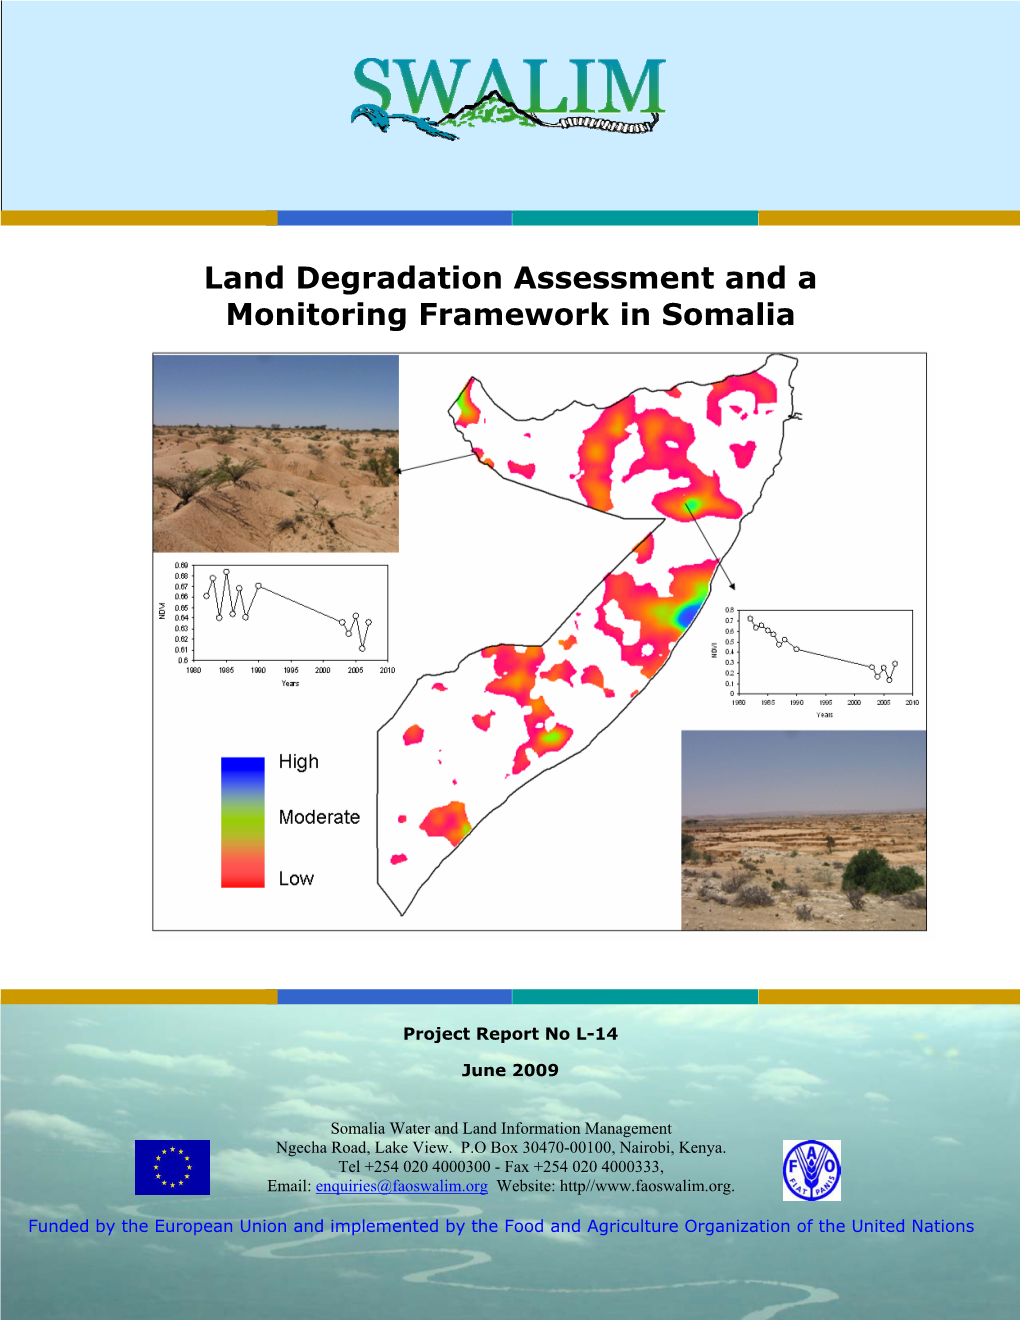 Land Degradation Assessment and a Monitoring Framework in Somalia